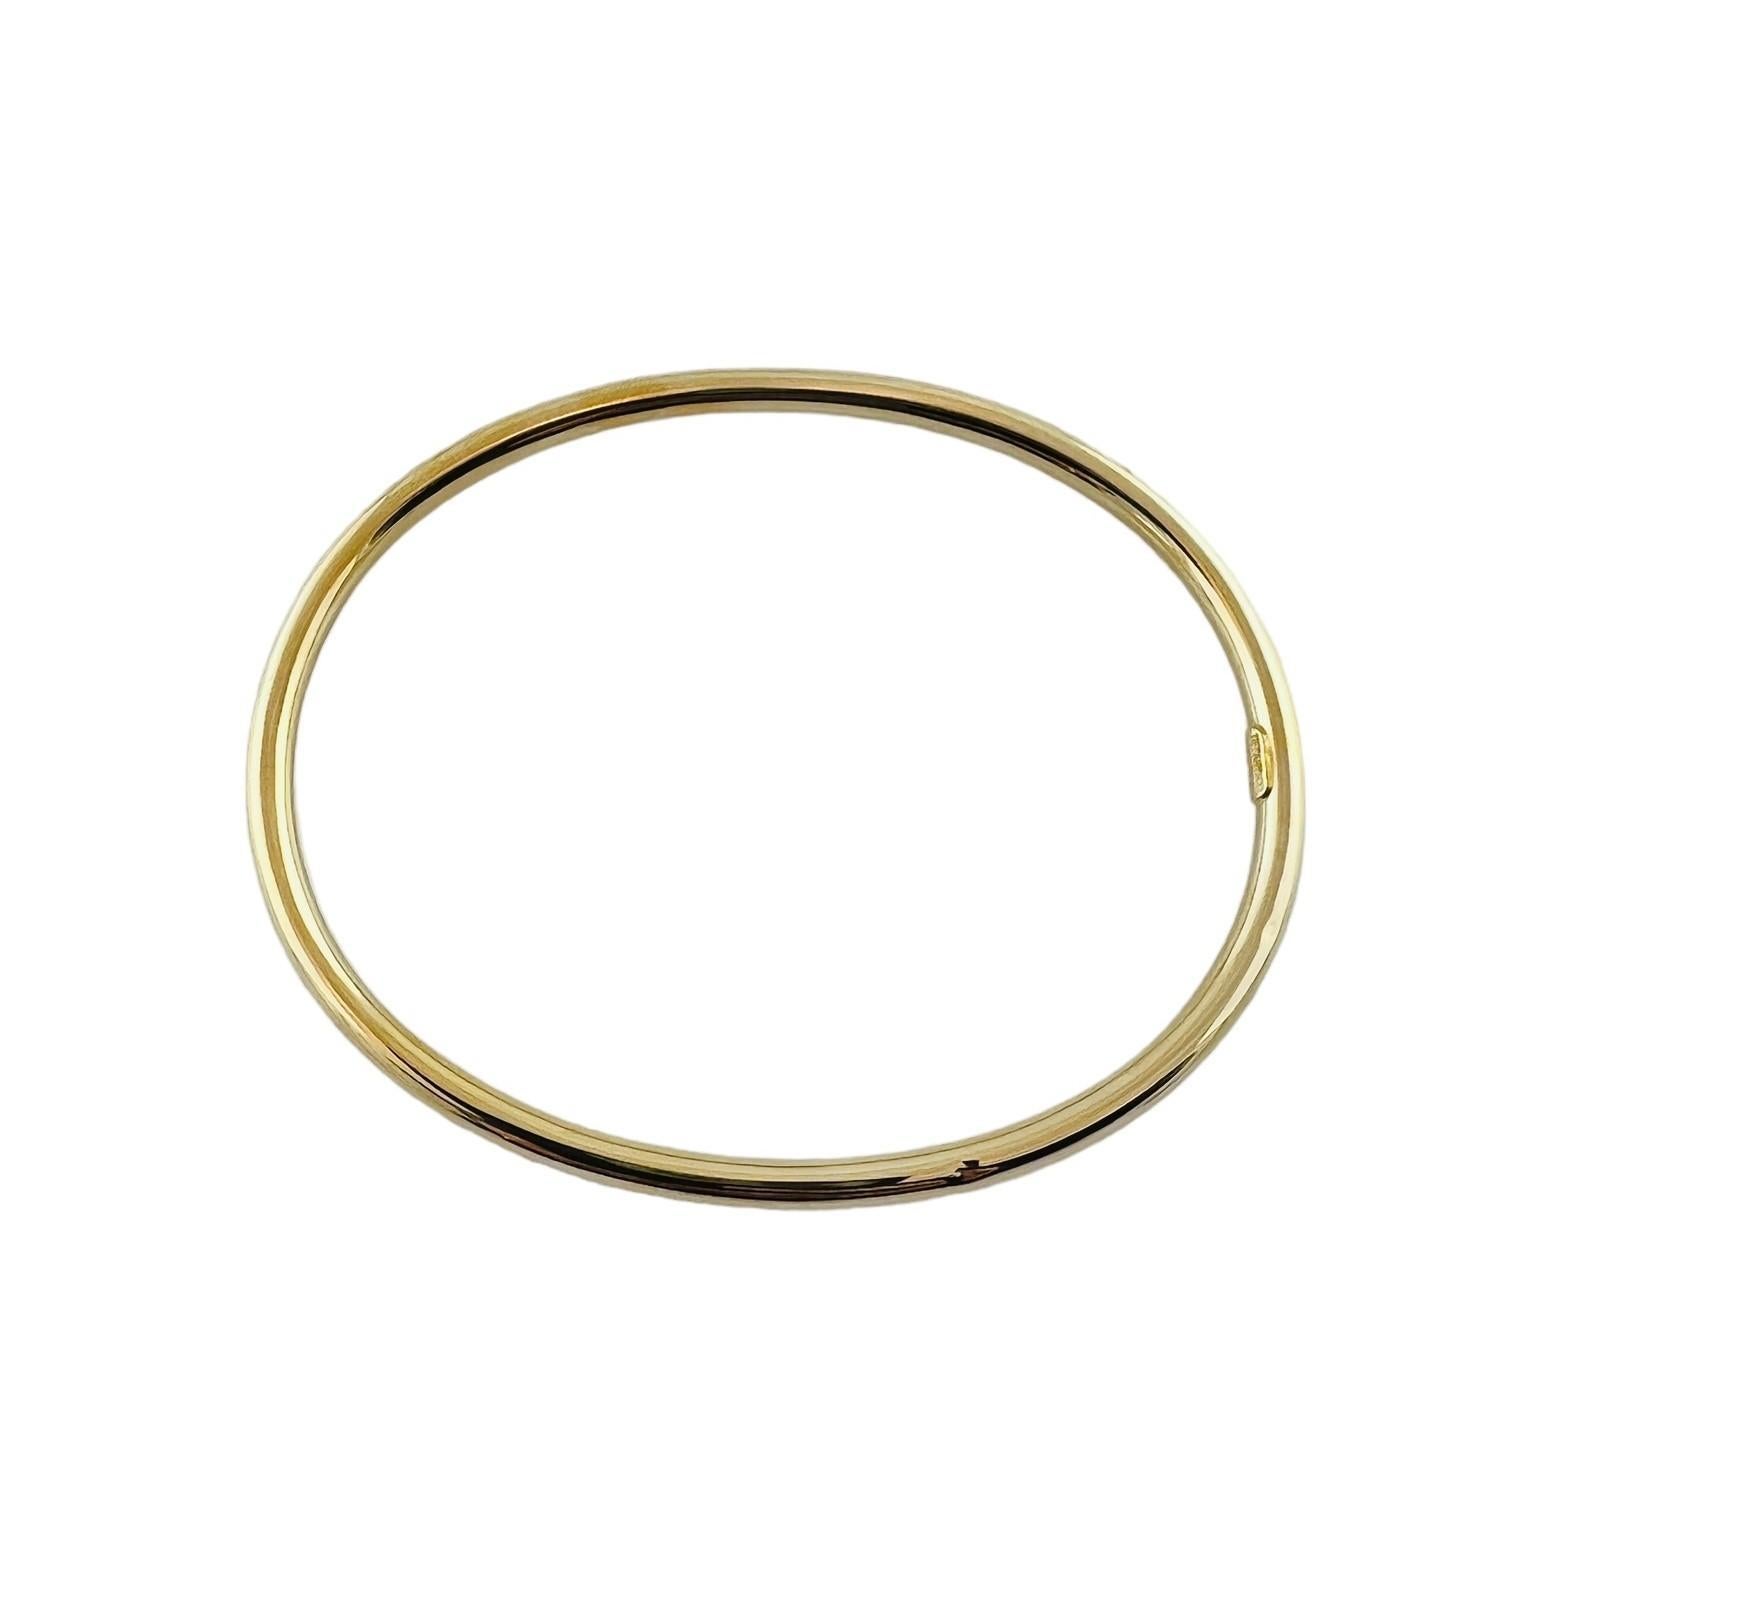 Tiffany & Co. 18K Yellow Gold Oval Bangle Bracelet #16680 3